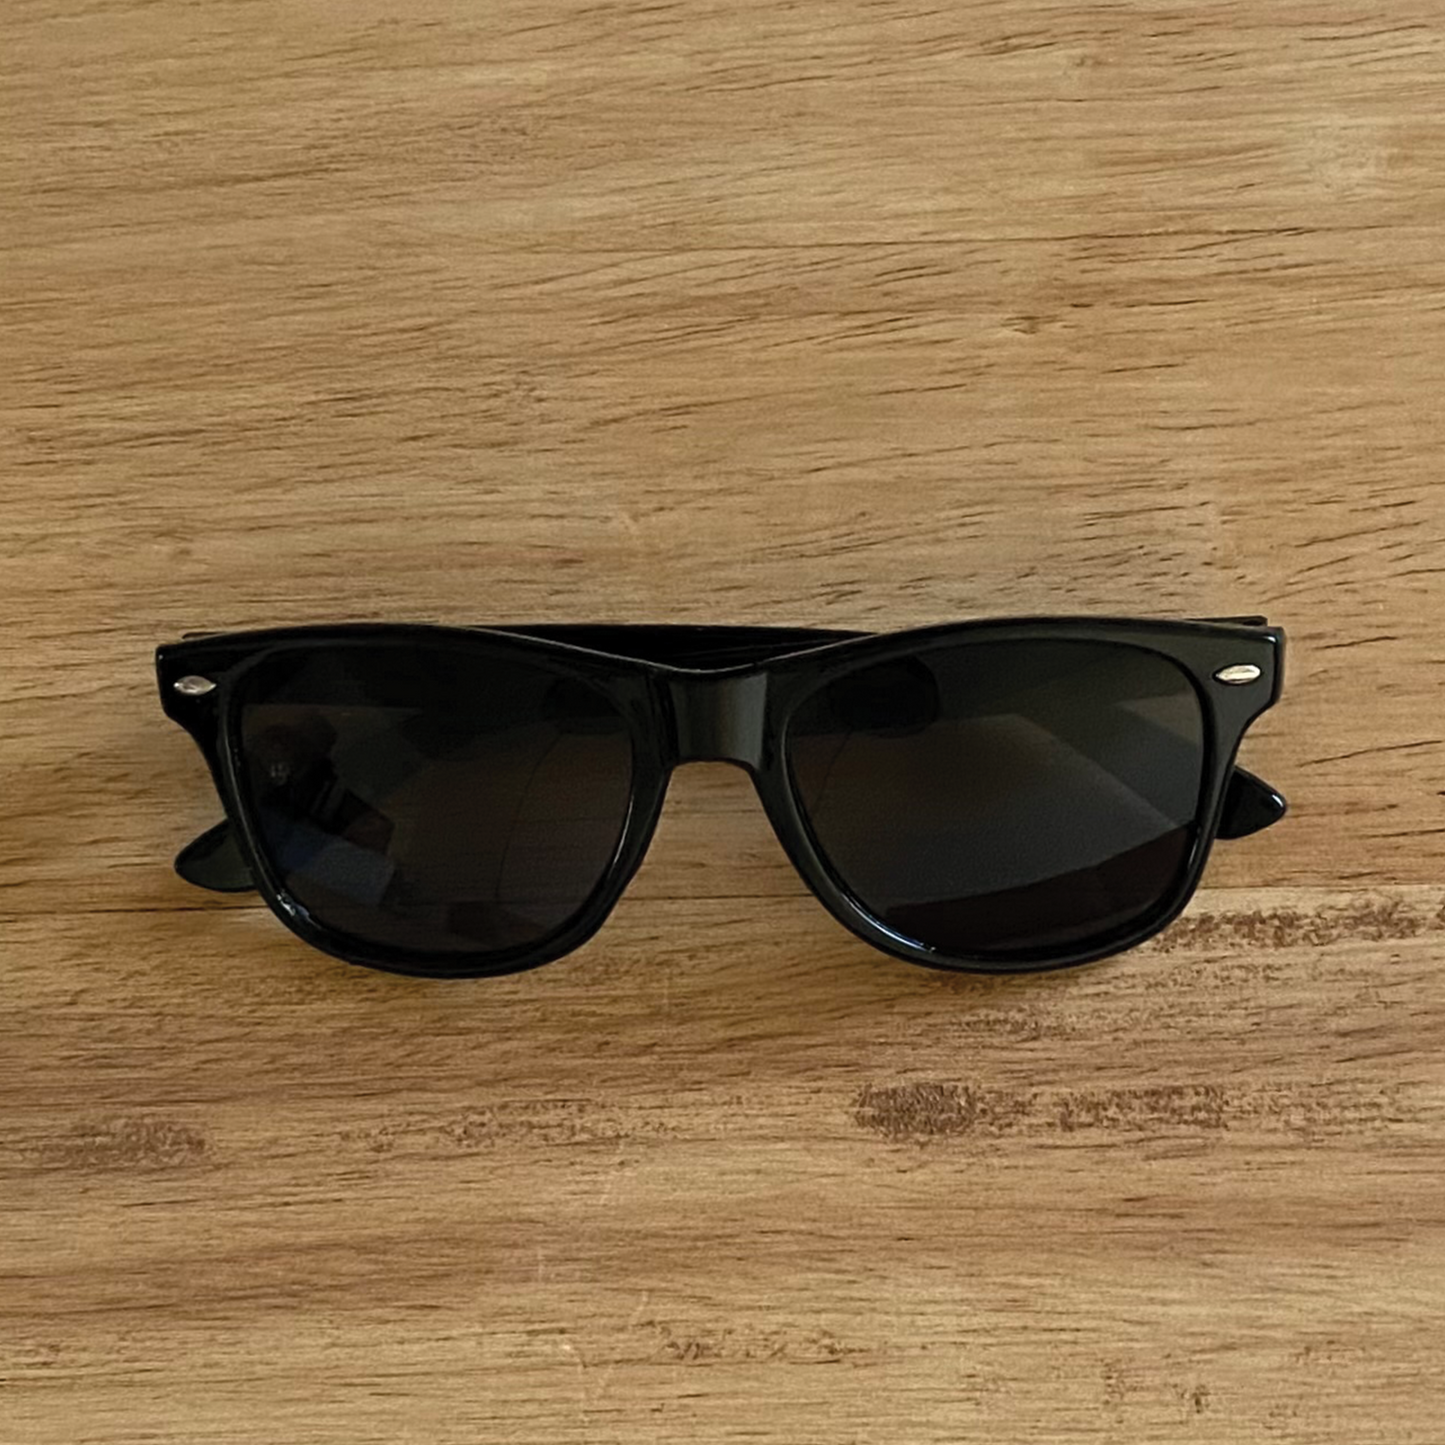 The Classic Sunglasses